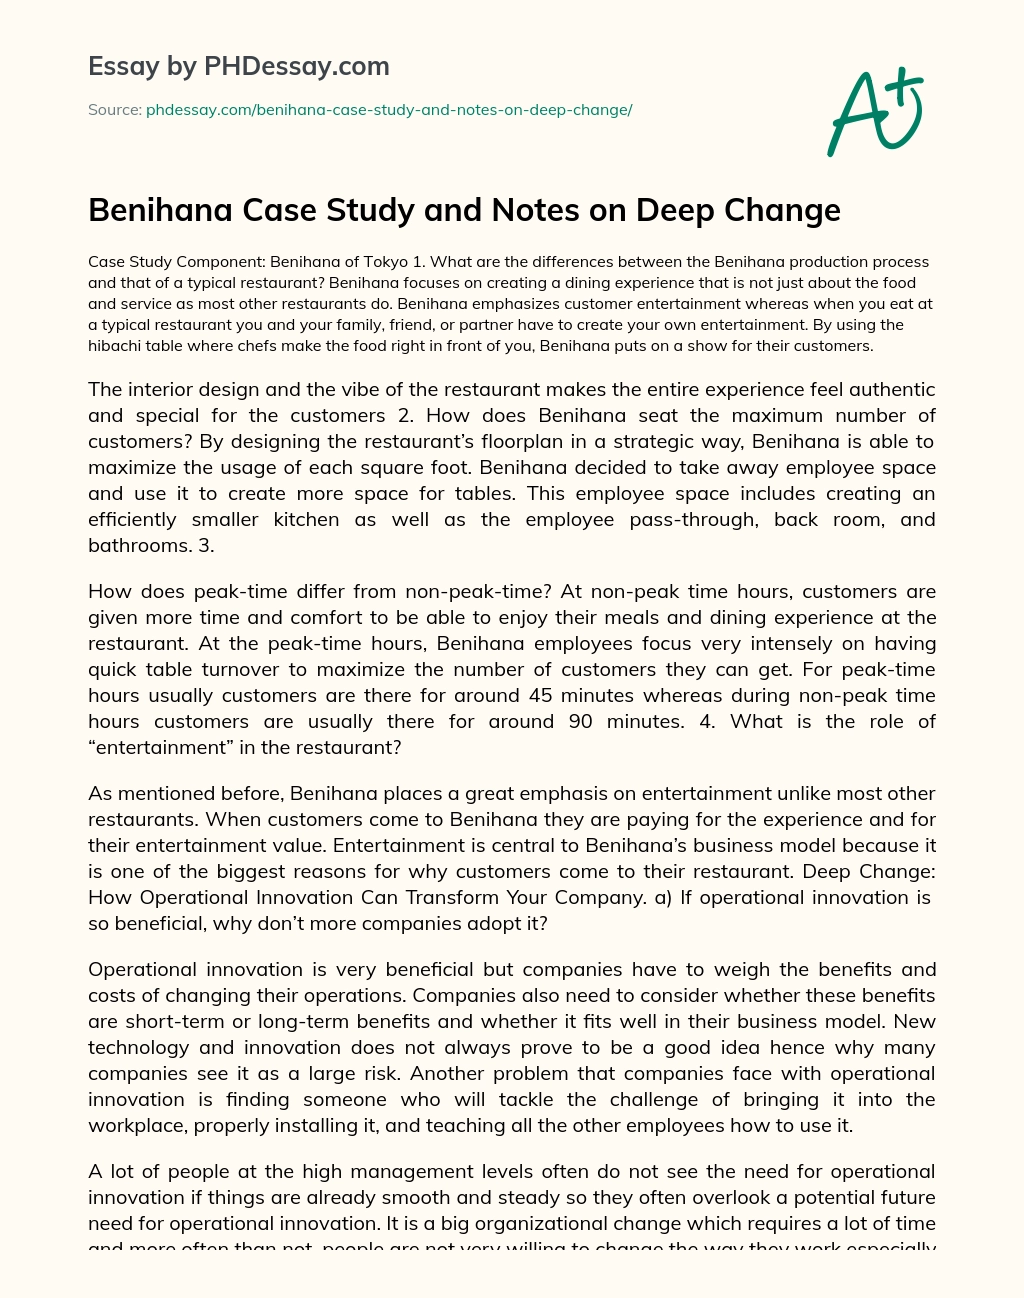 Benihana Case Study and Notes on Deep Change essay